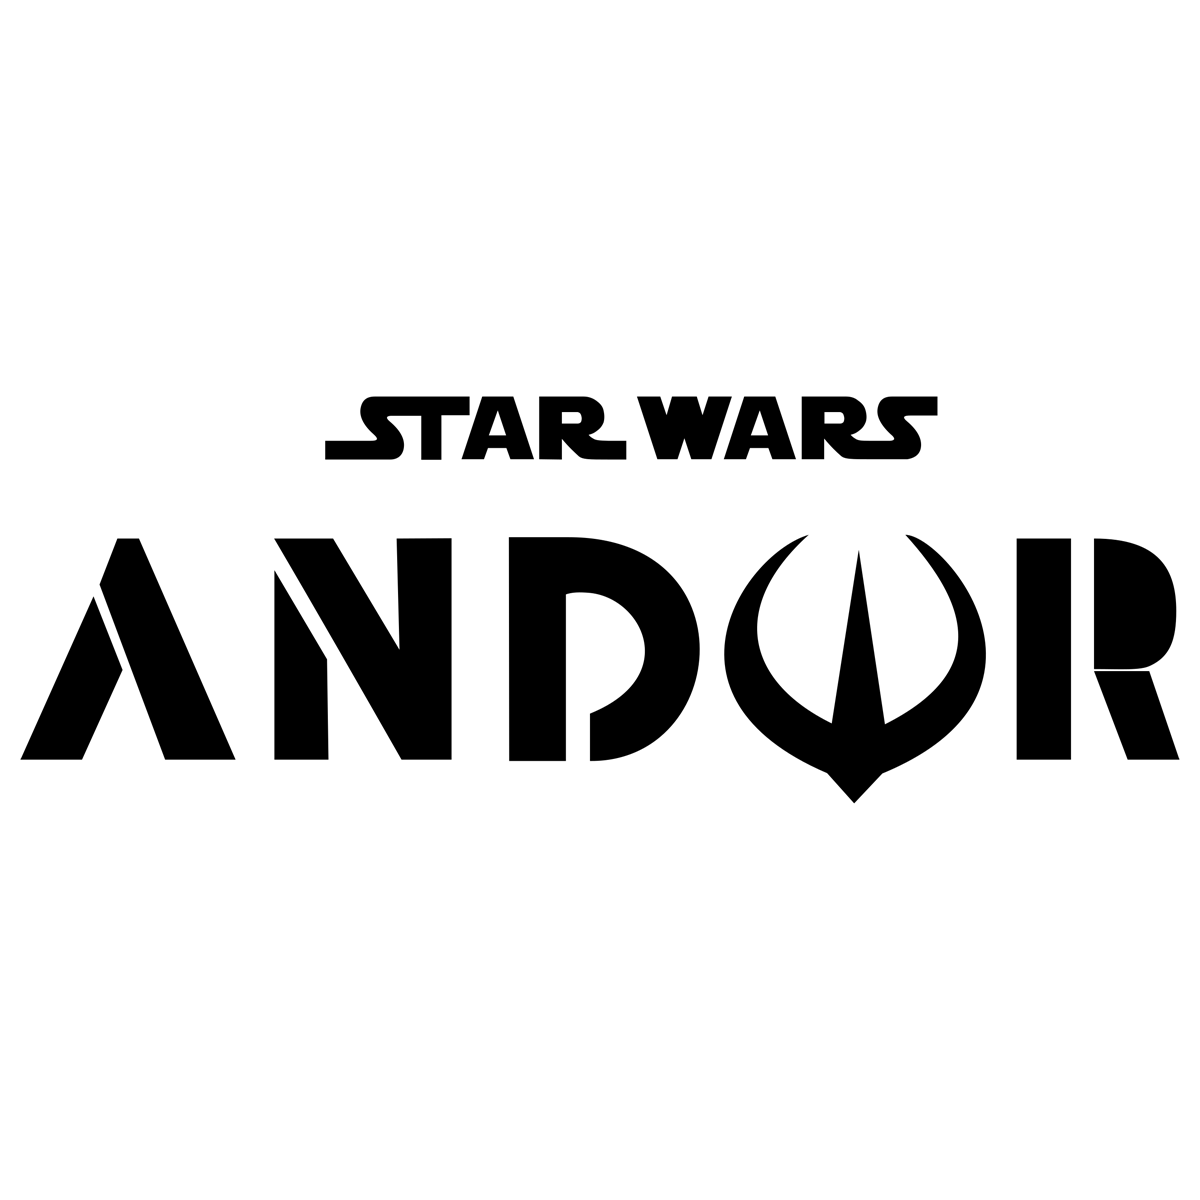 Star Wars TV Series Andor logo PNG